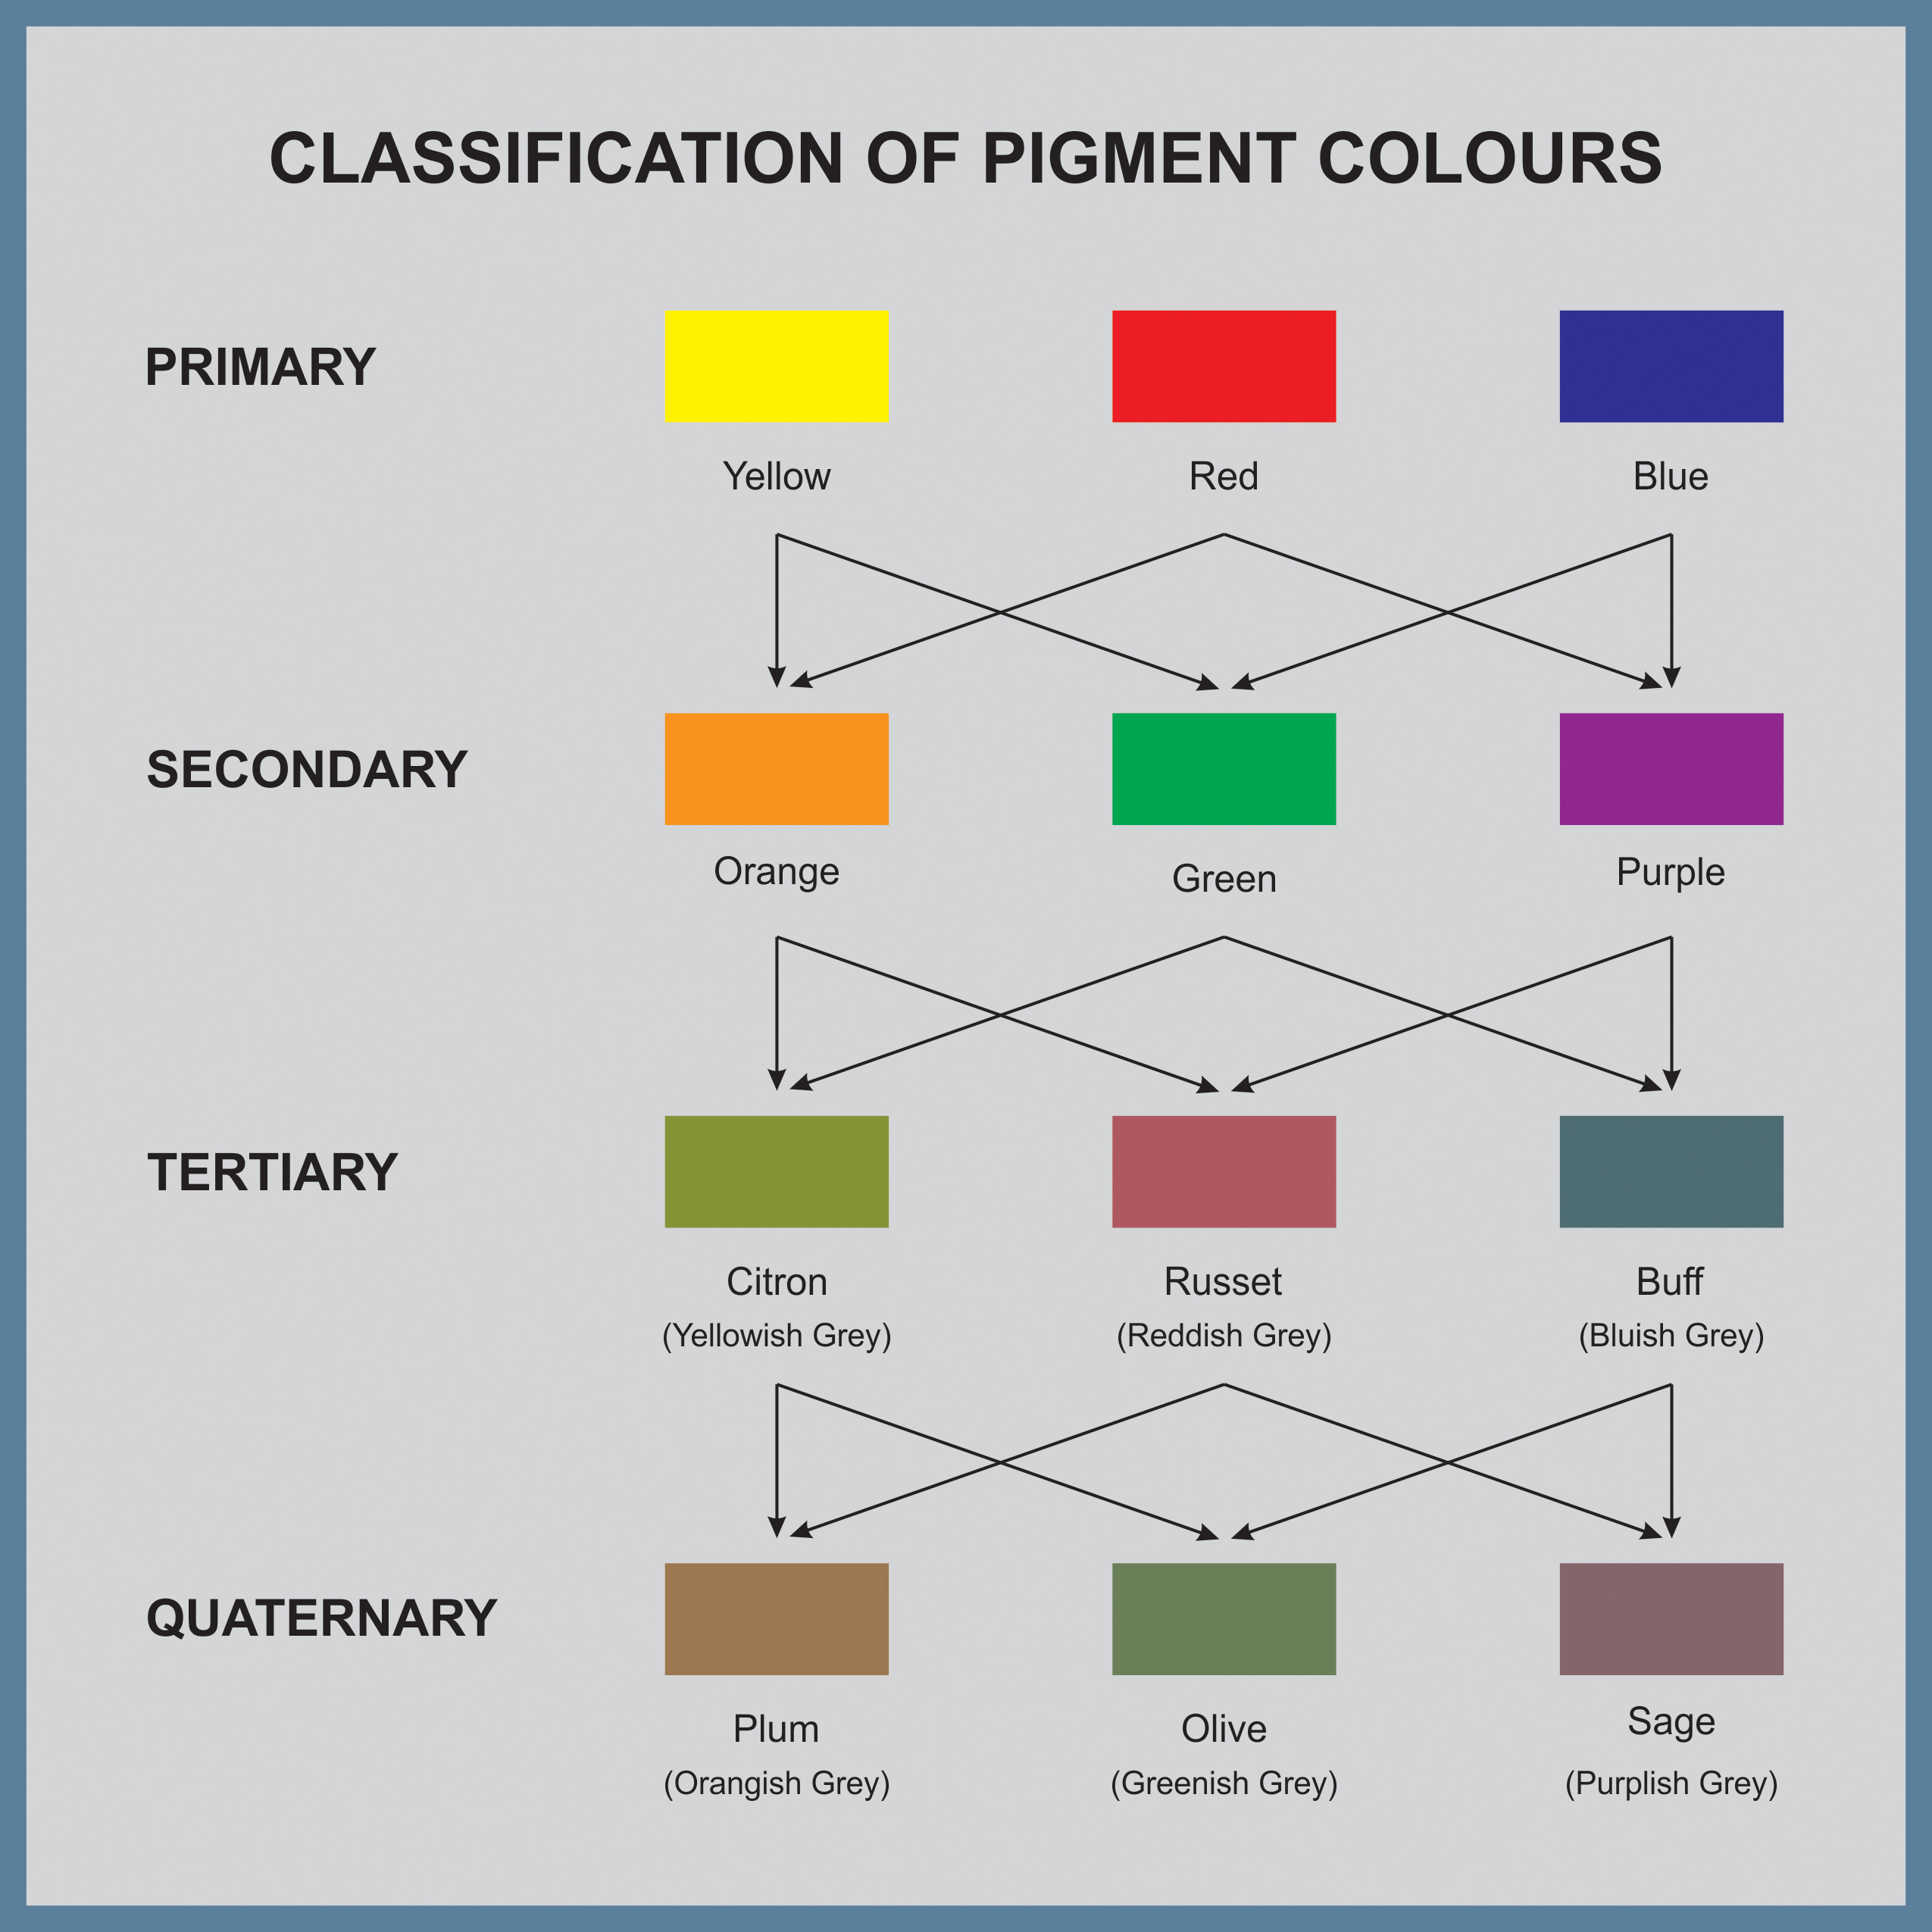 https://upload.wikimedia.org/wikipedia/commons/6/6e/Pigment_Colours_-_Classification.jpg